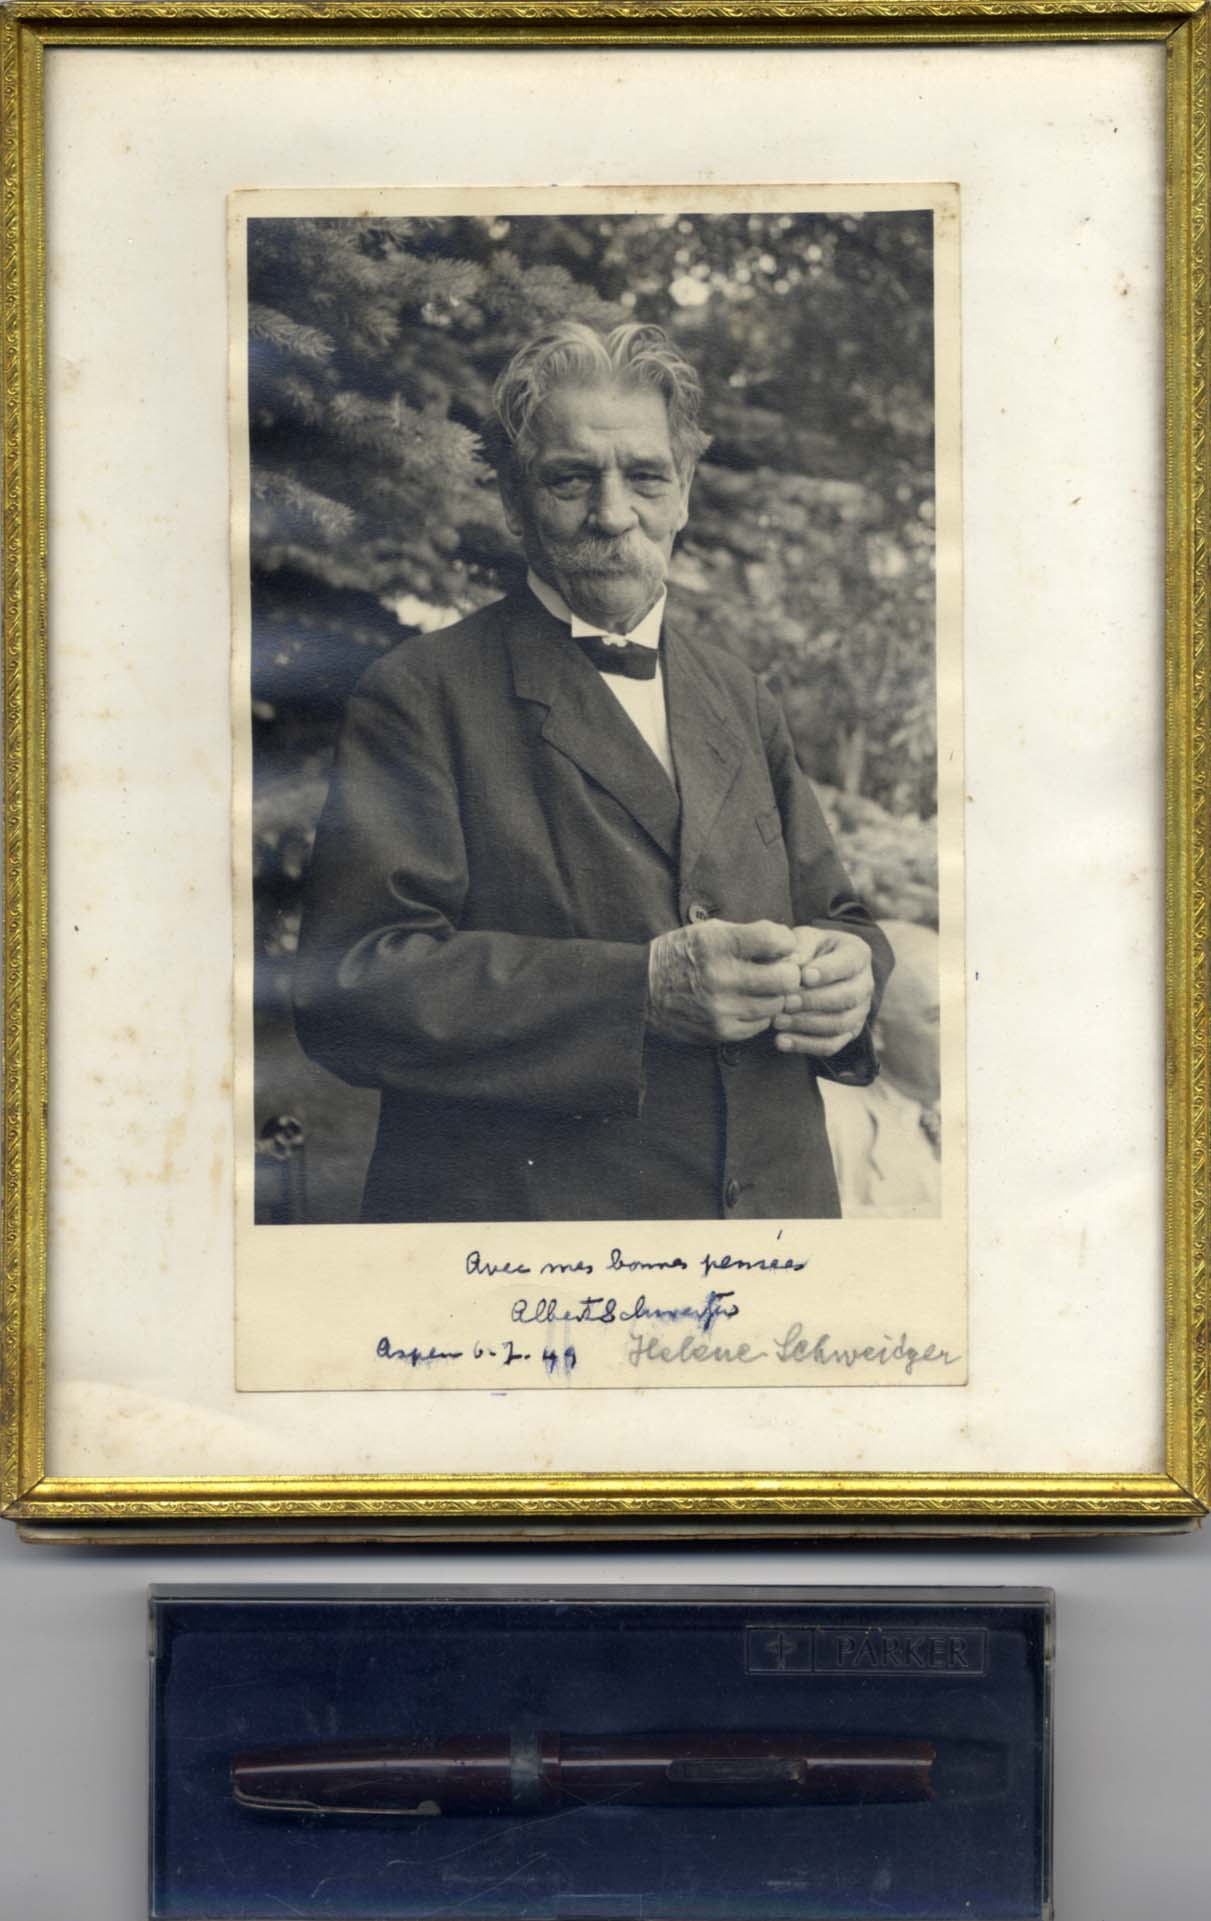 Albert Schweitzer Autograph Autogramm | ID 7907281862805